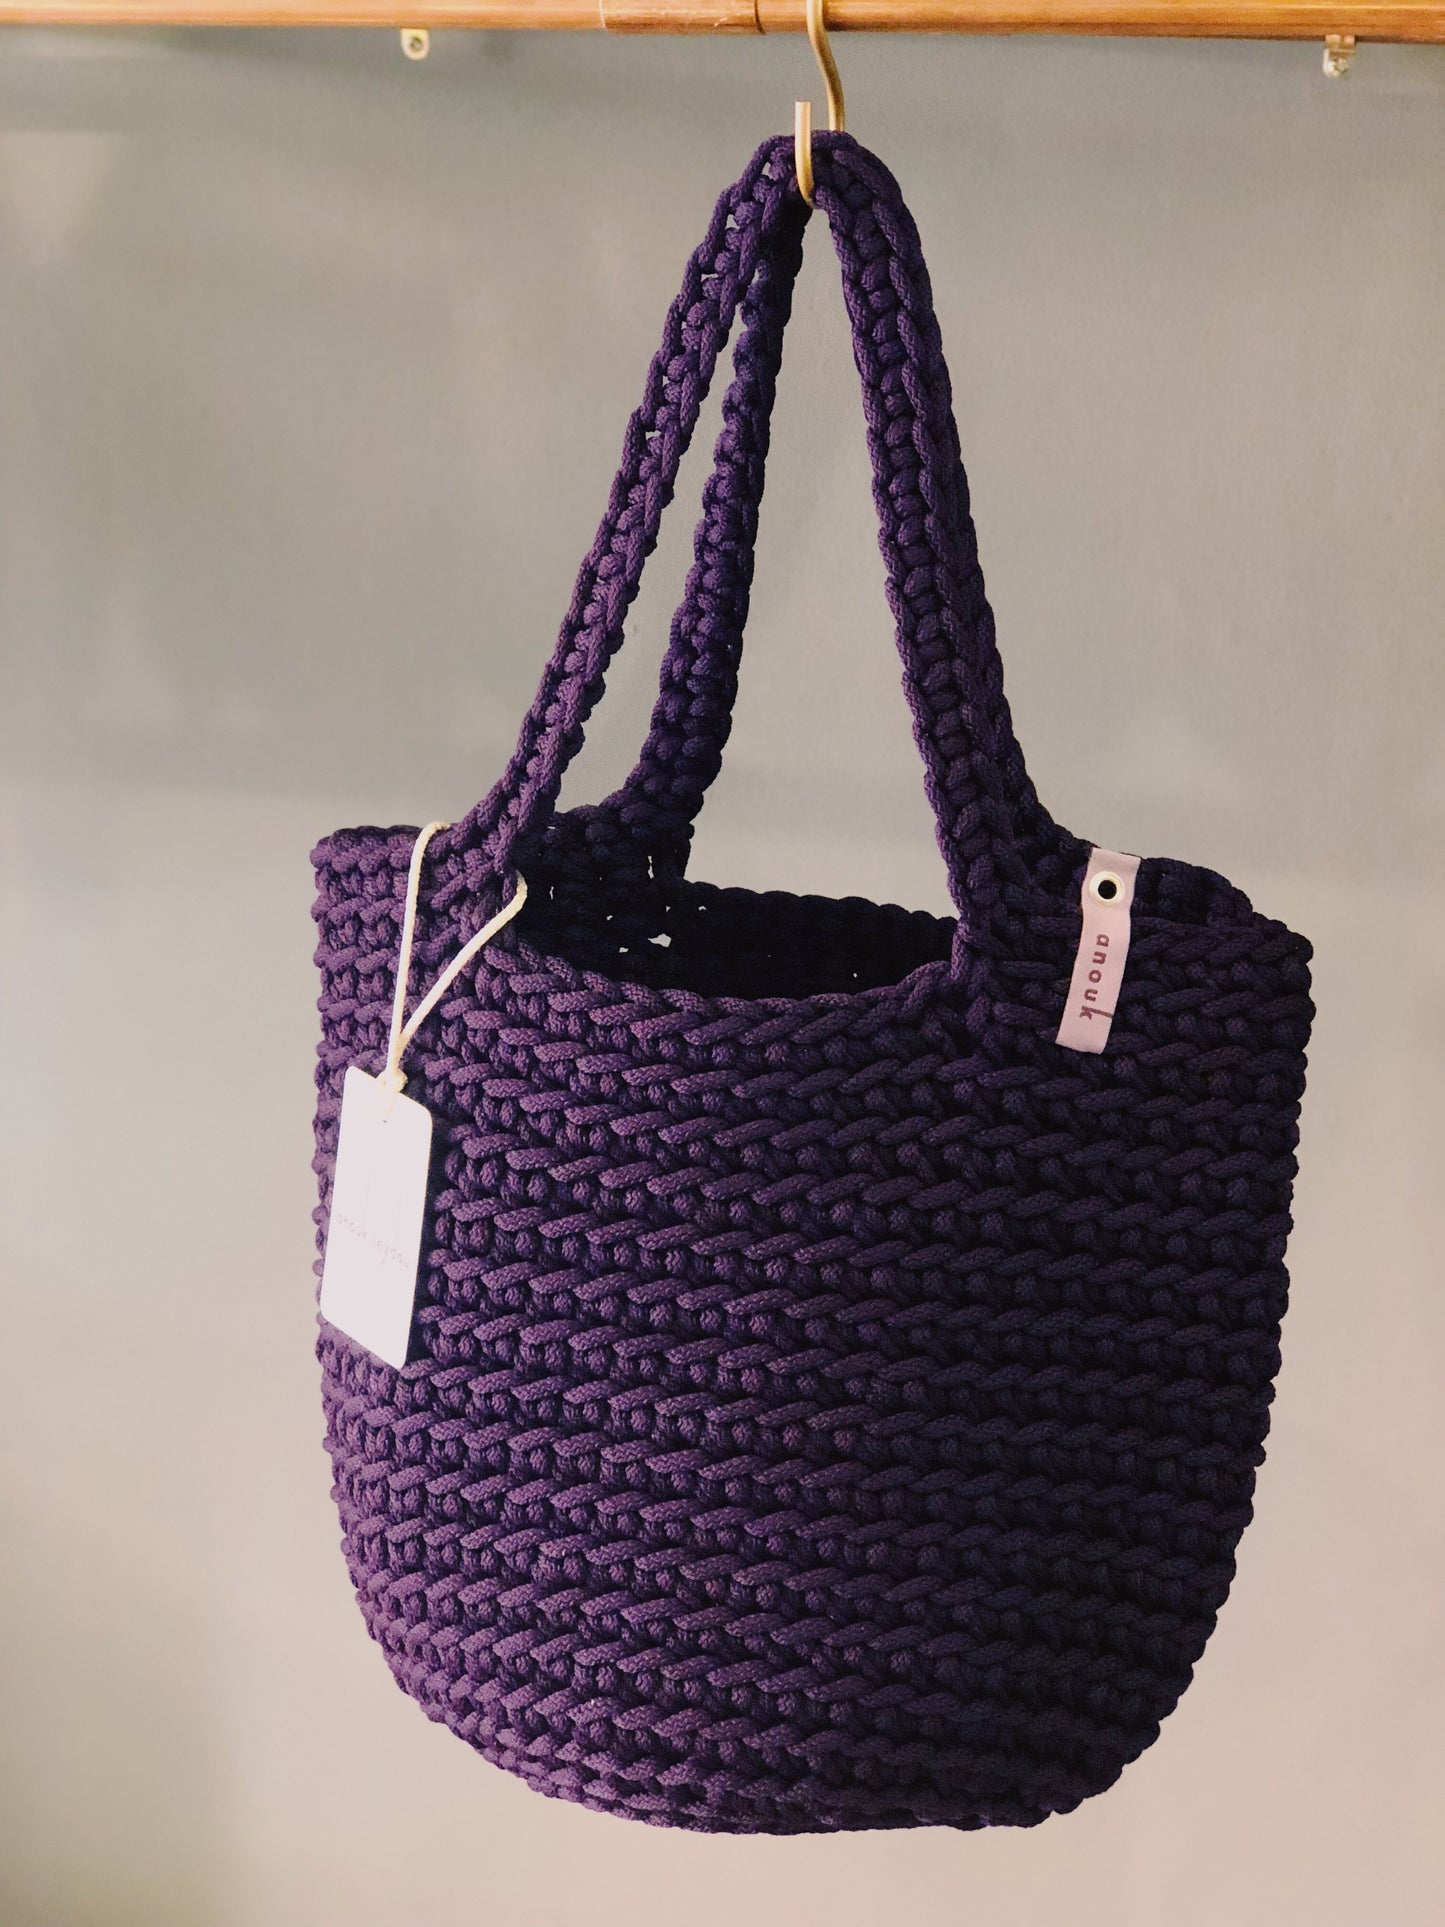 Scandinavian Style Crochet Tote Bag Handmade Knitted Handbag Gift for Her DEEP VIOLET color